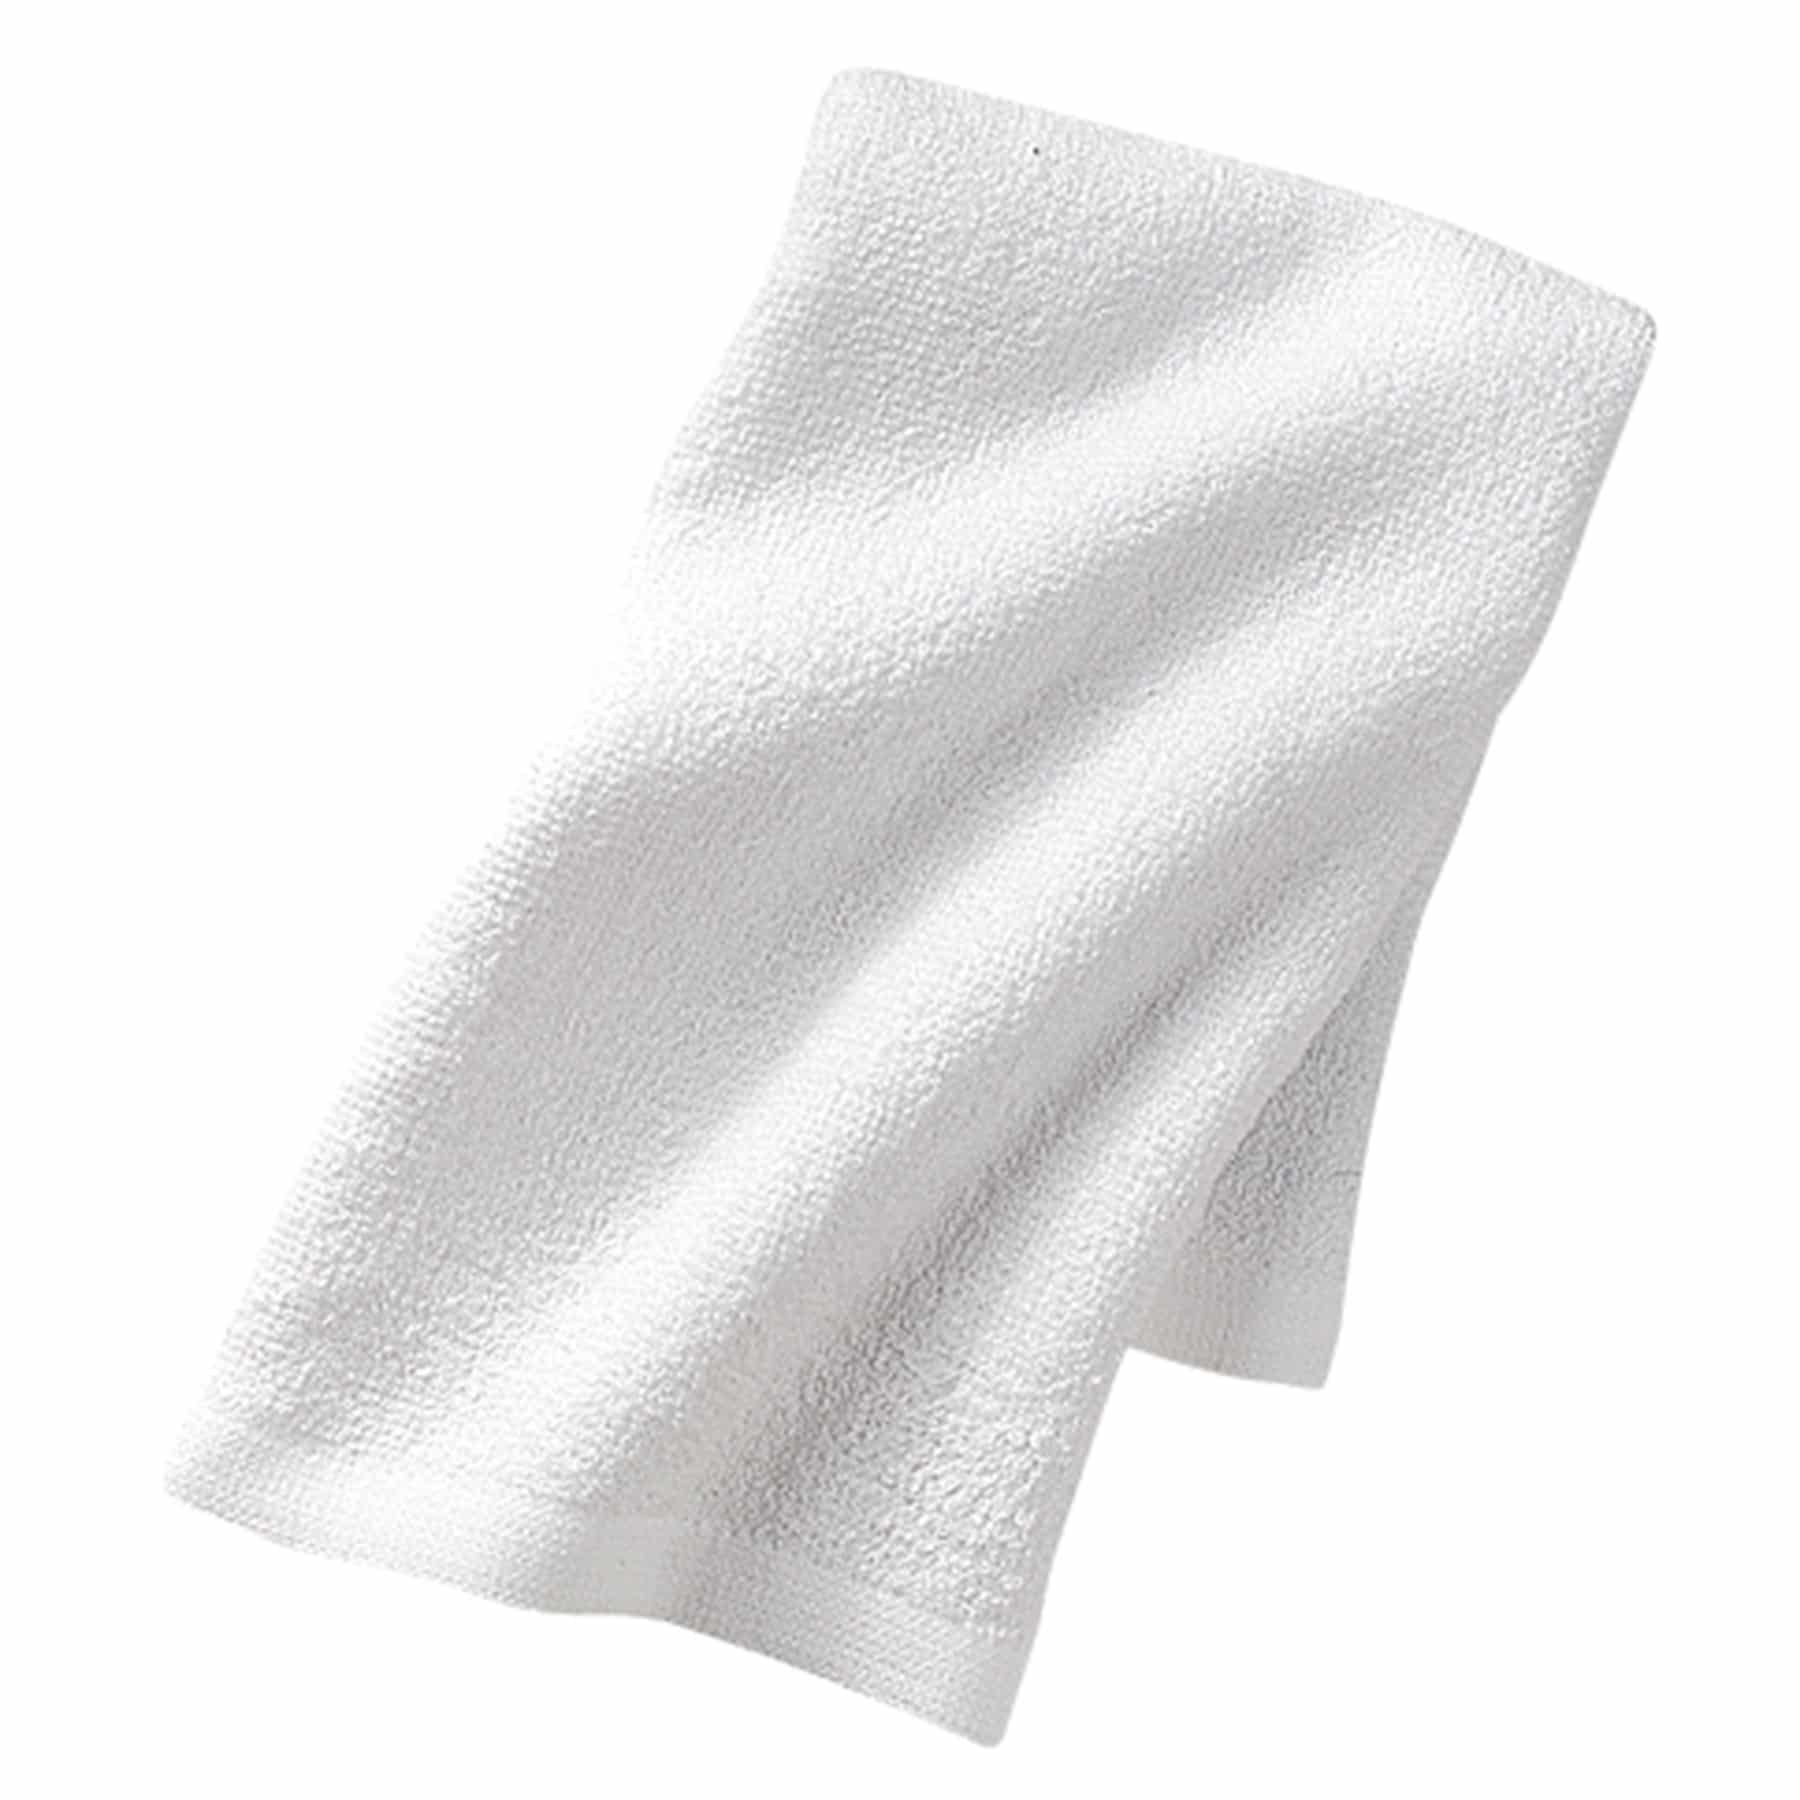 https://www.thetoweldepot.com/wp-content/uploads/2019/09/White-Rally-Towels.jpg